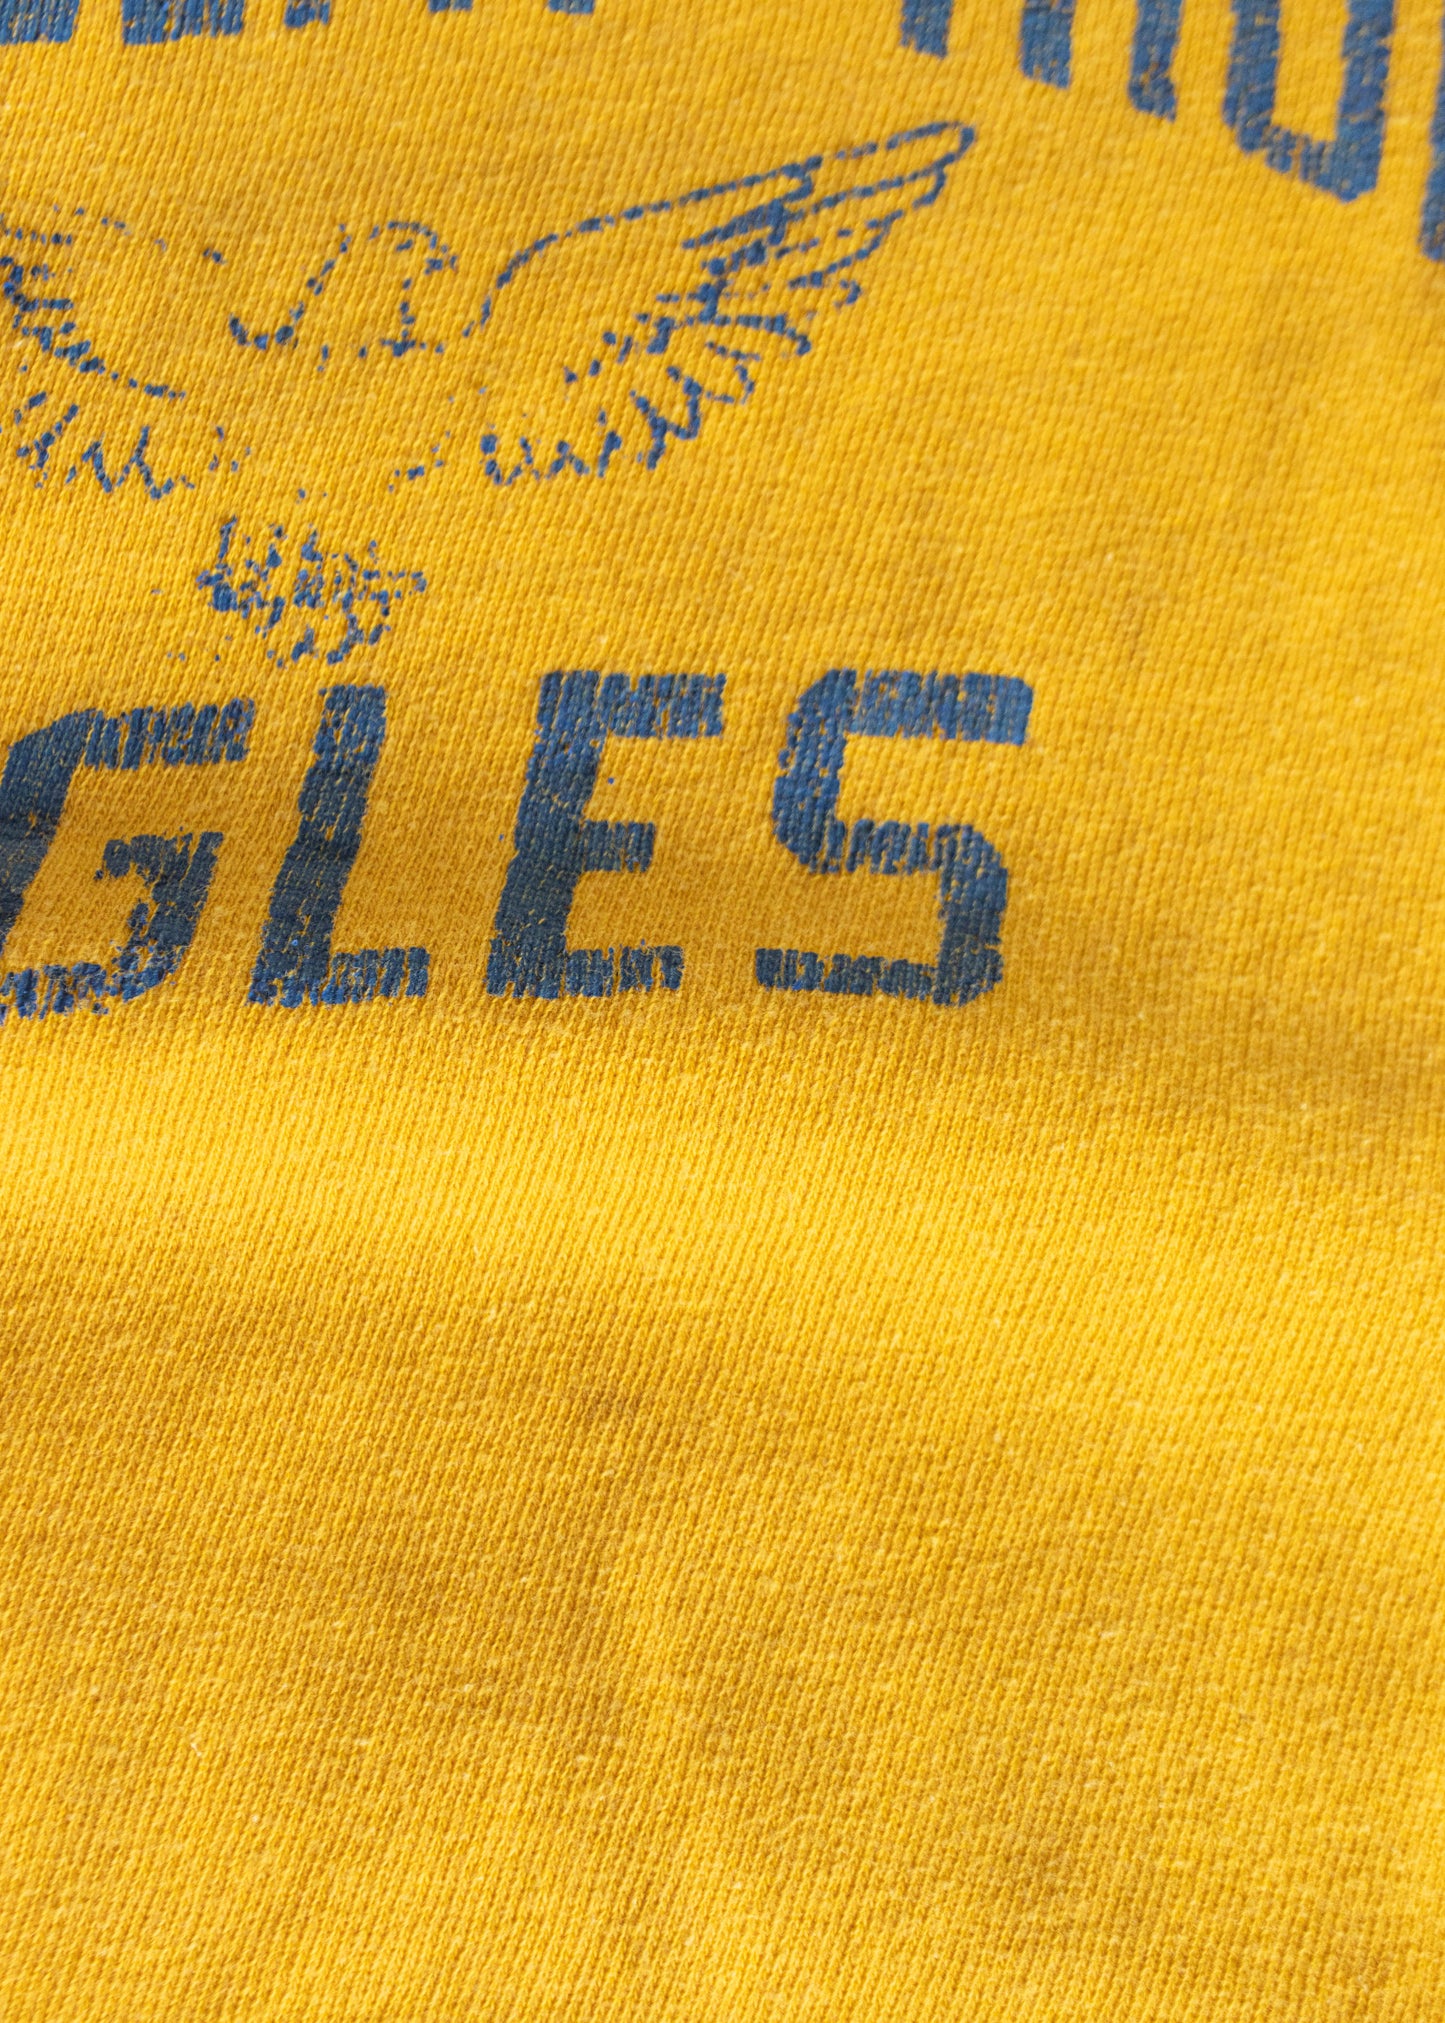 1960s Wahlert High Eagles Raglan Sweatshirt Size M/L